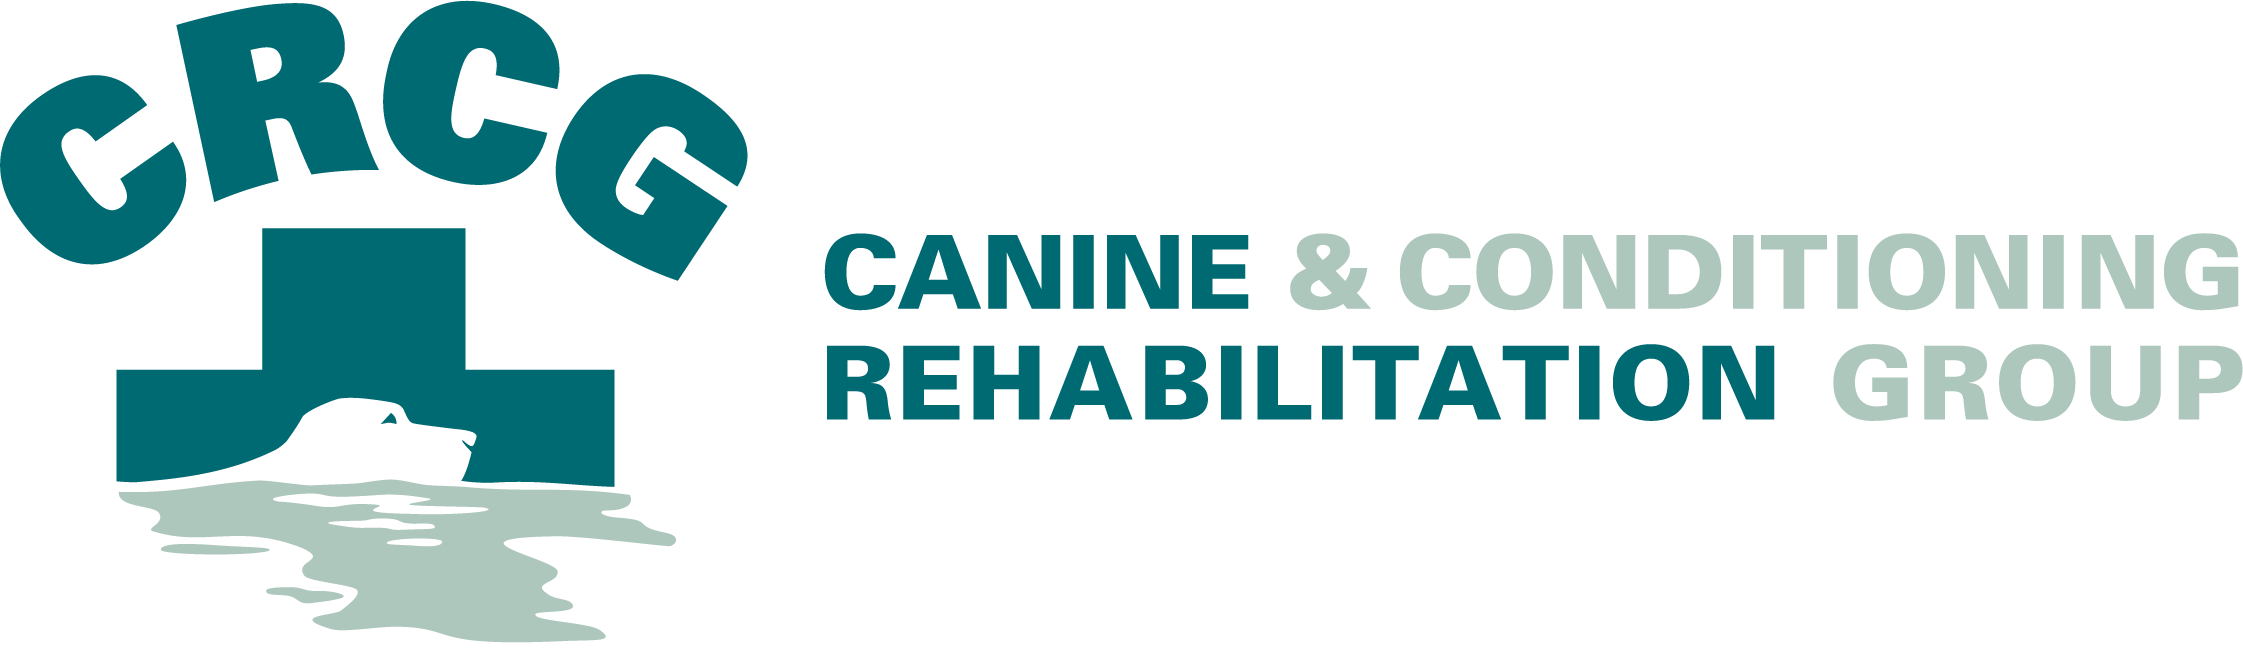 CRCG - Canine Rehabilitation & Conditioning Group